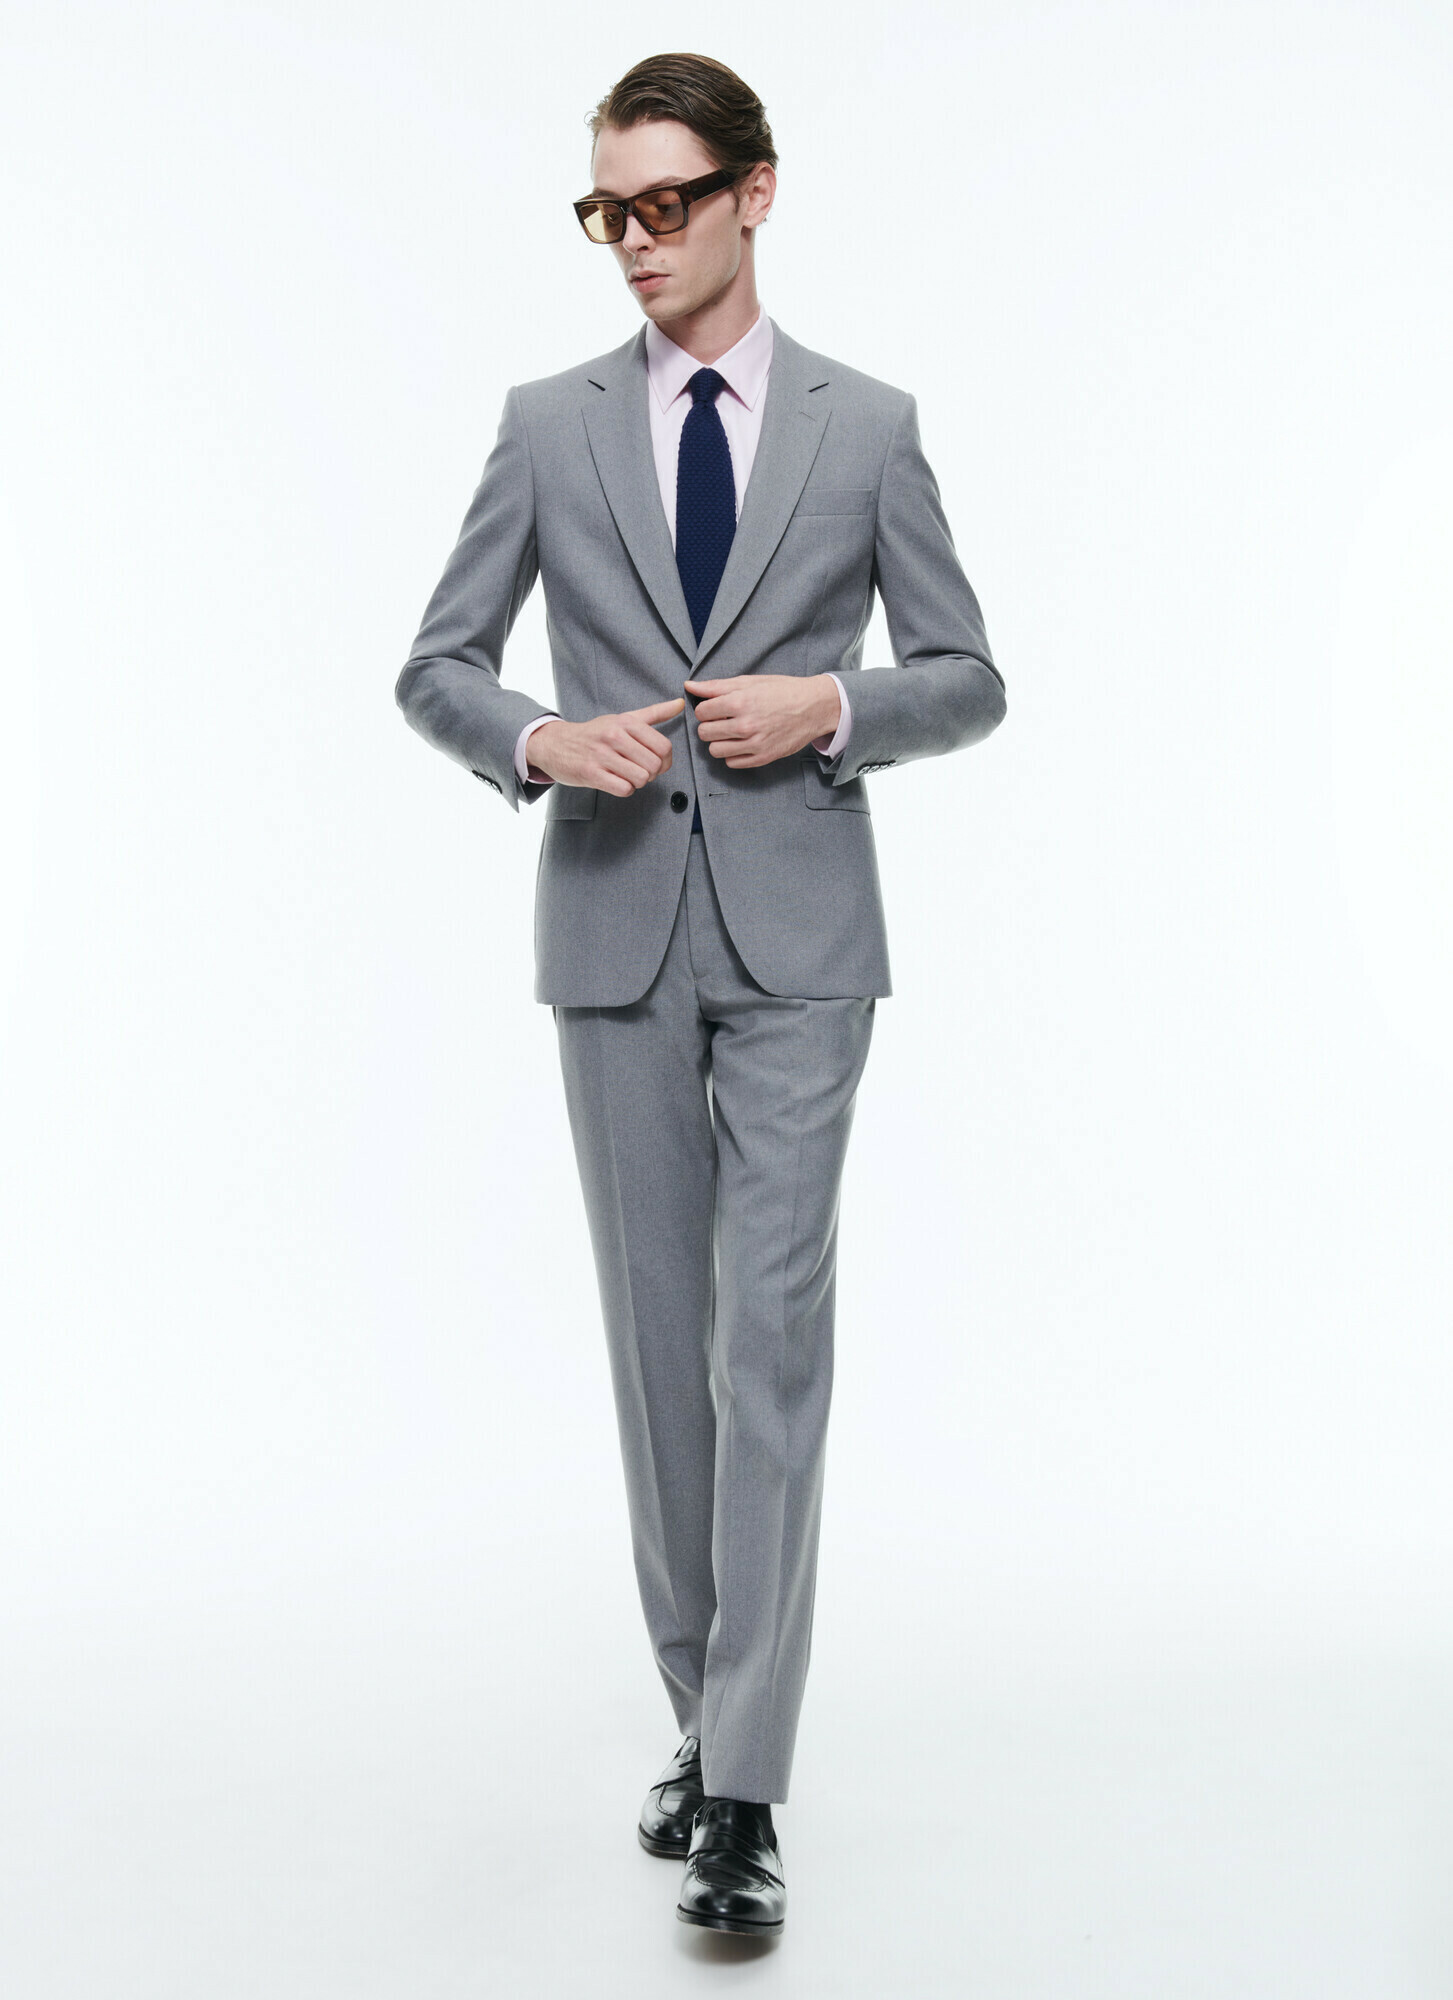 Le vestiaire de bureau par Fursac - Fursac Clothing & Mens Suits